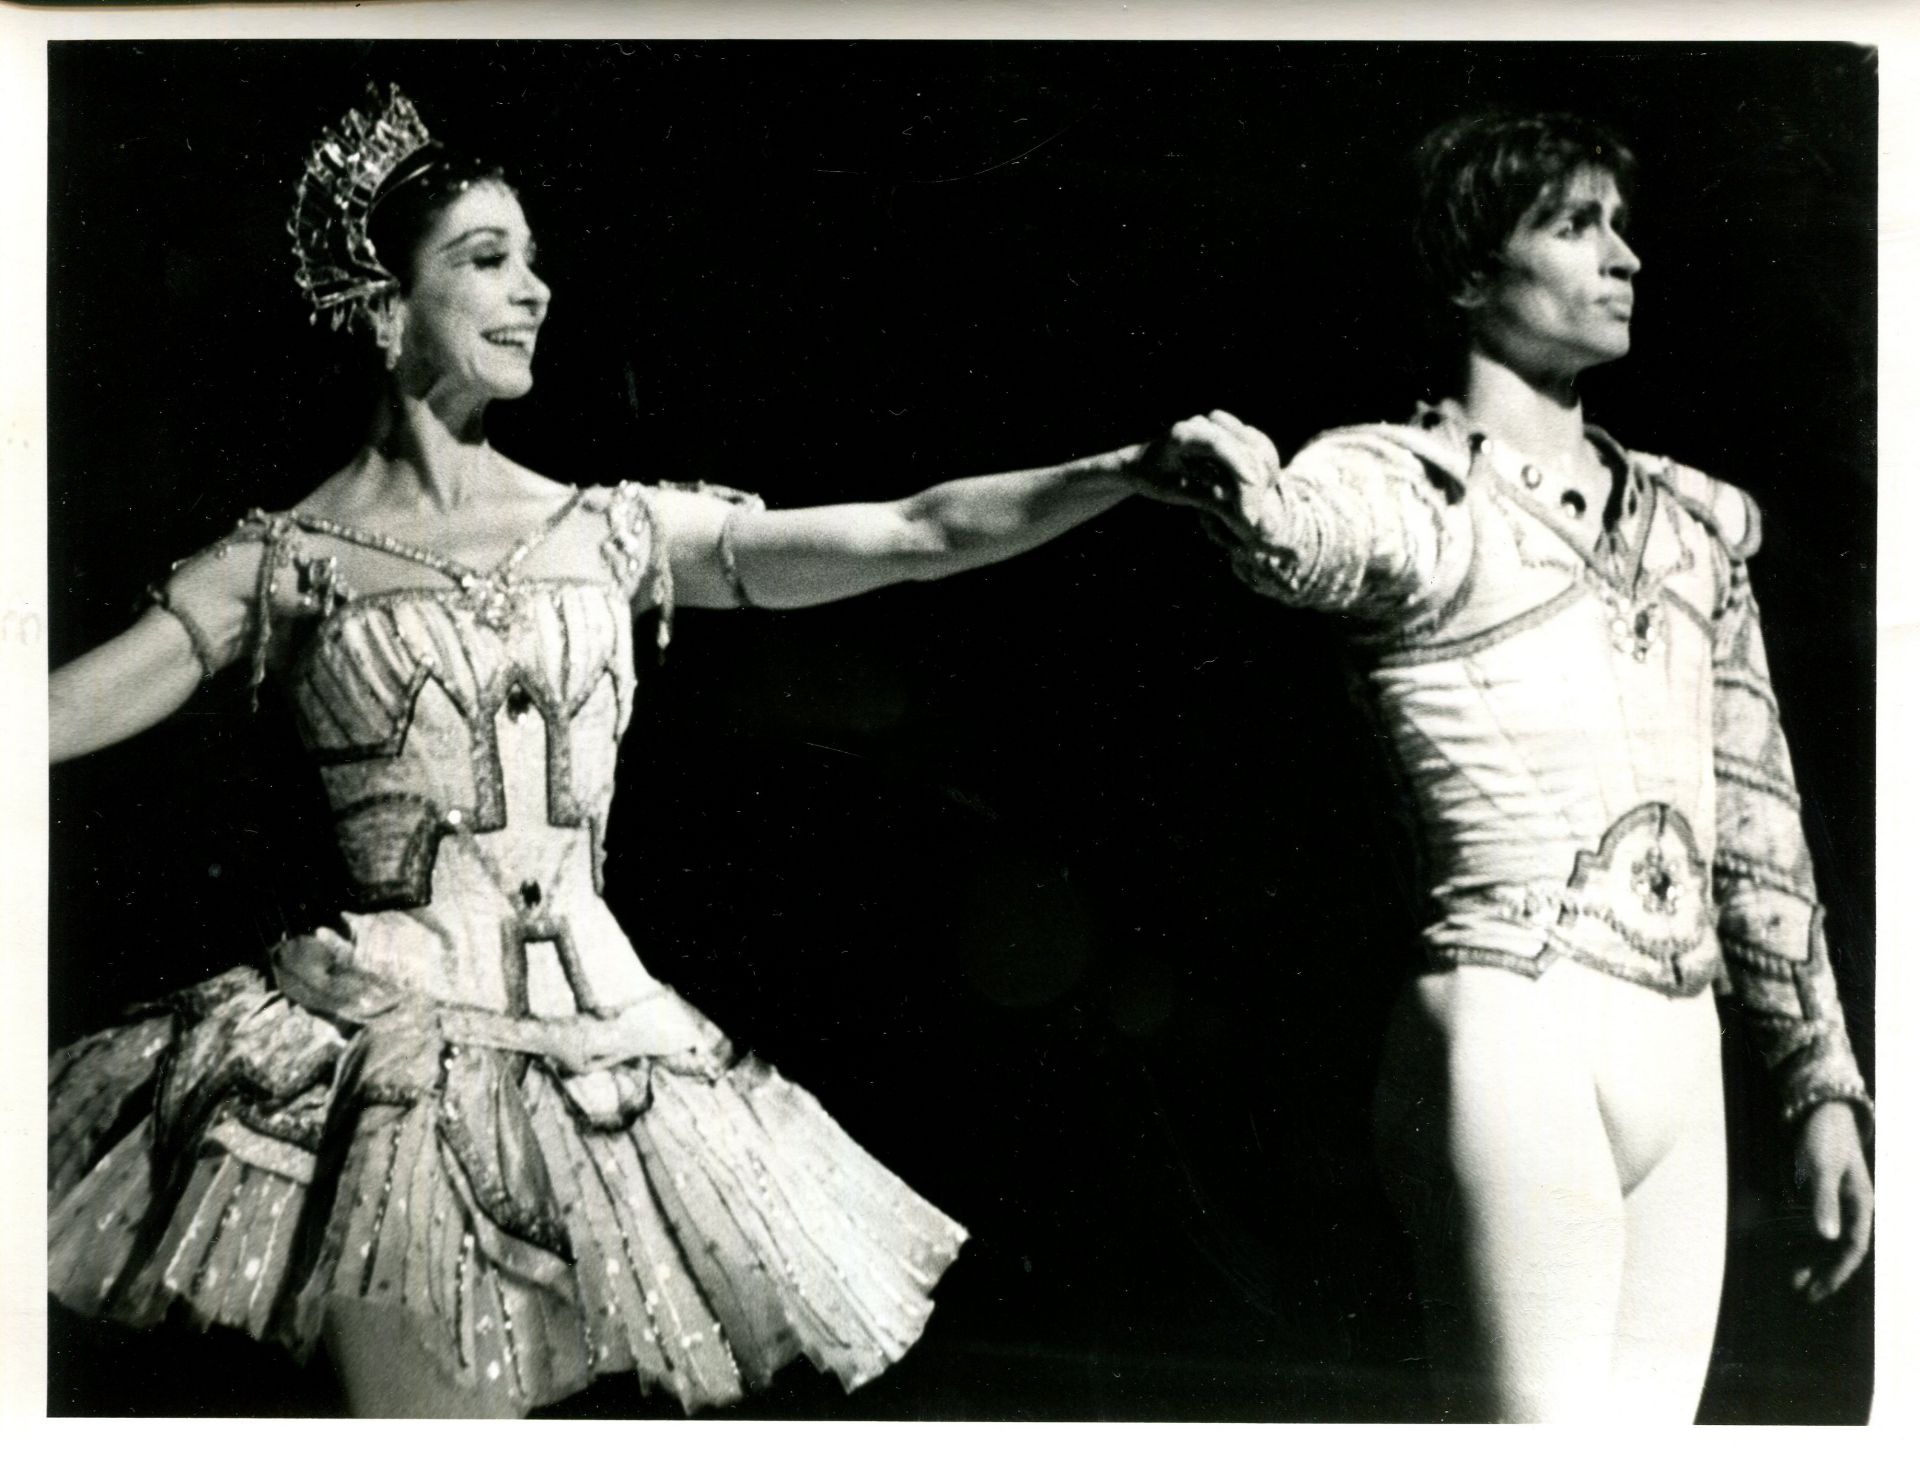 [FONTEYN & NUREYEV]: [FONTEYN MARGOT] (1919-1991) English ballerina & [NUREYEV RUDOLF] (1938-1993) - Image 5 of 17